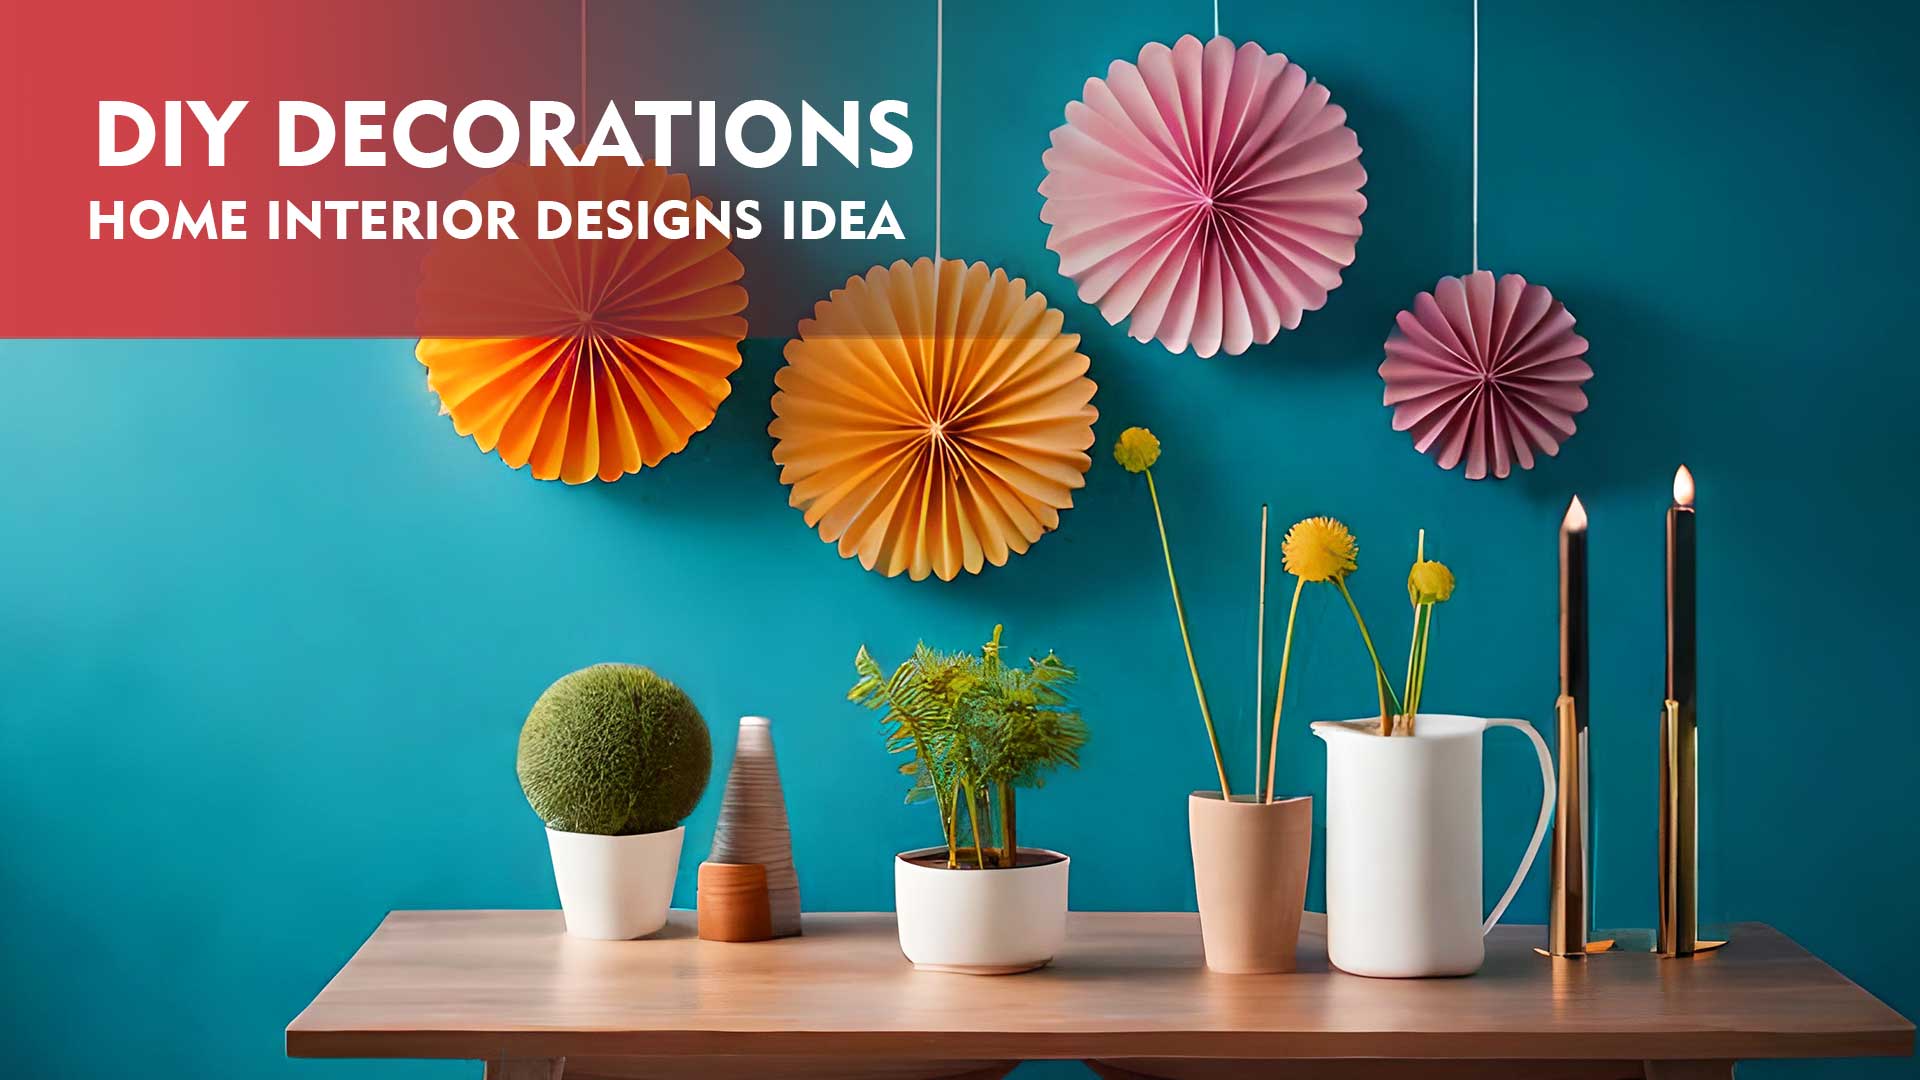 DIY Decorations Home Interior designs idea